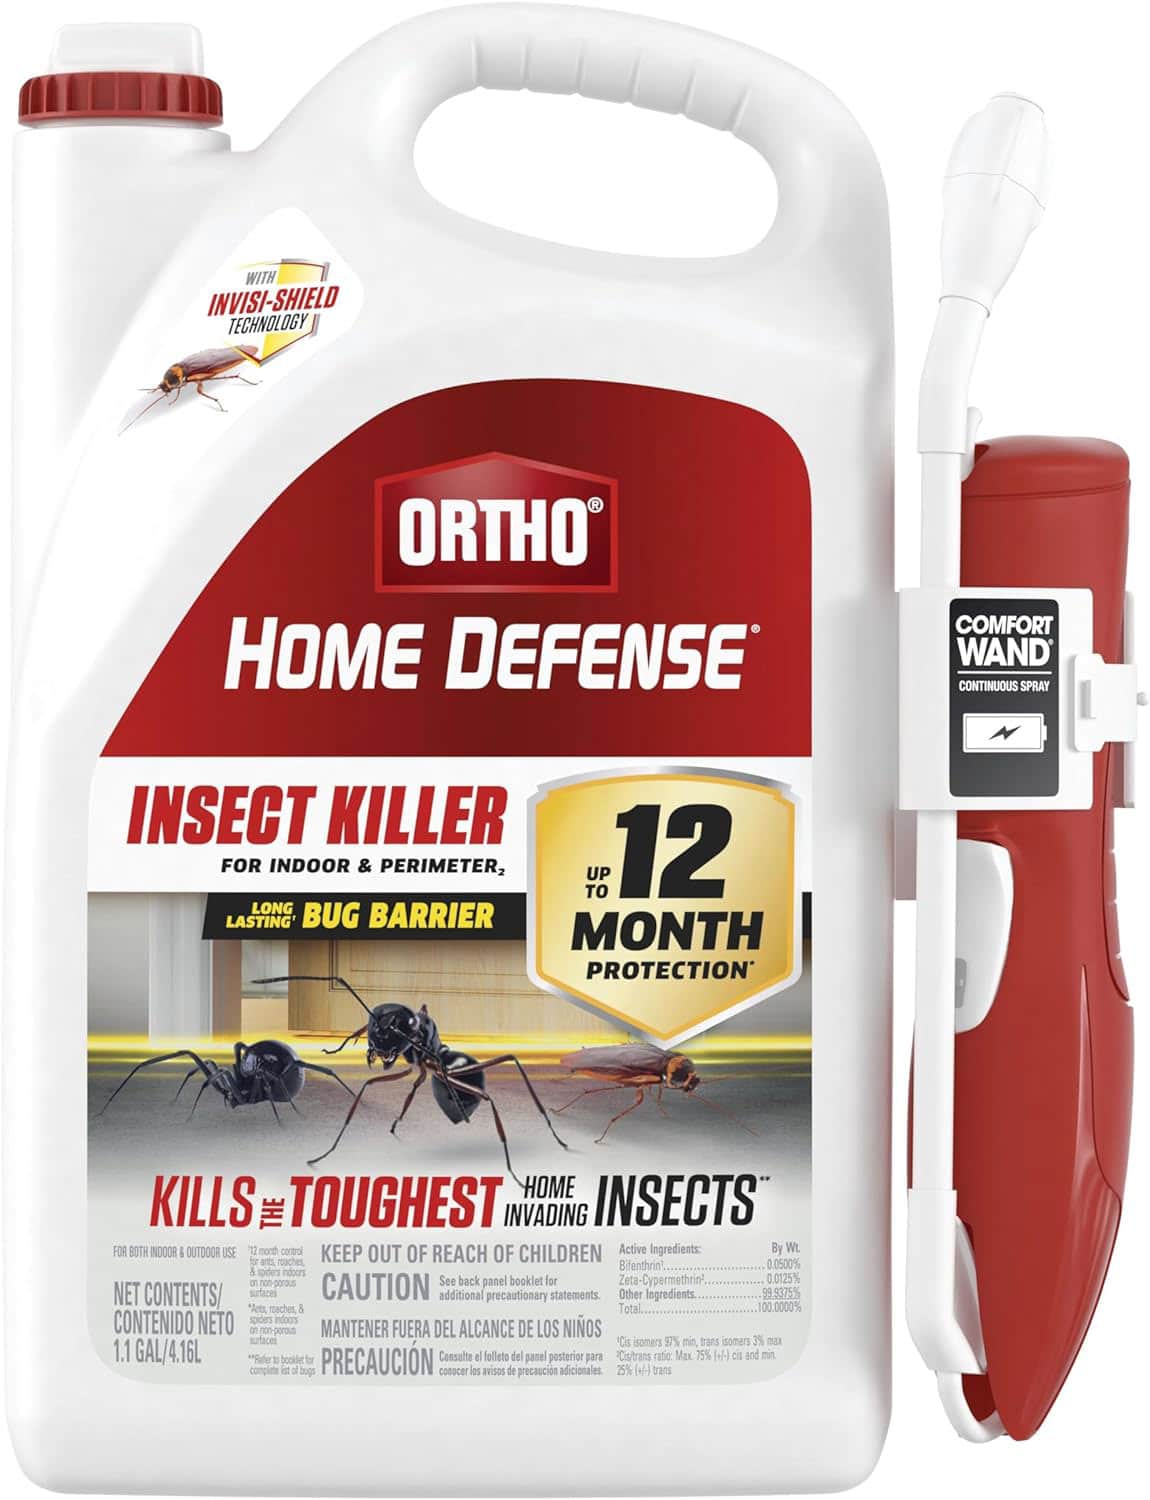 DIY Pest Control Sprays